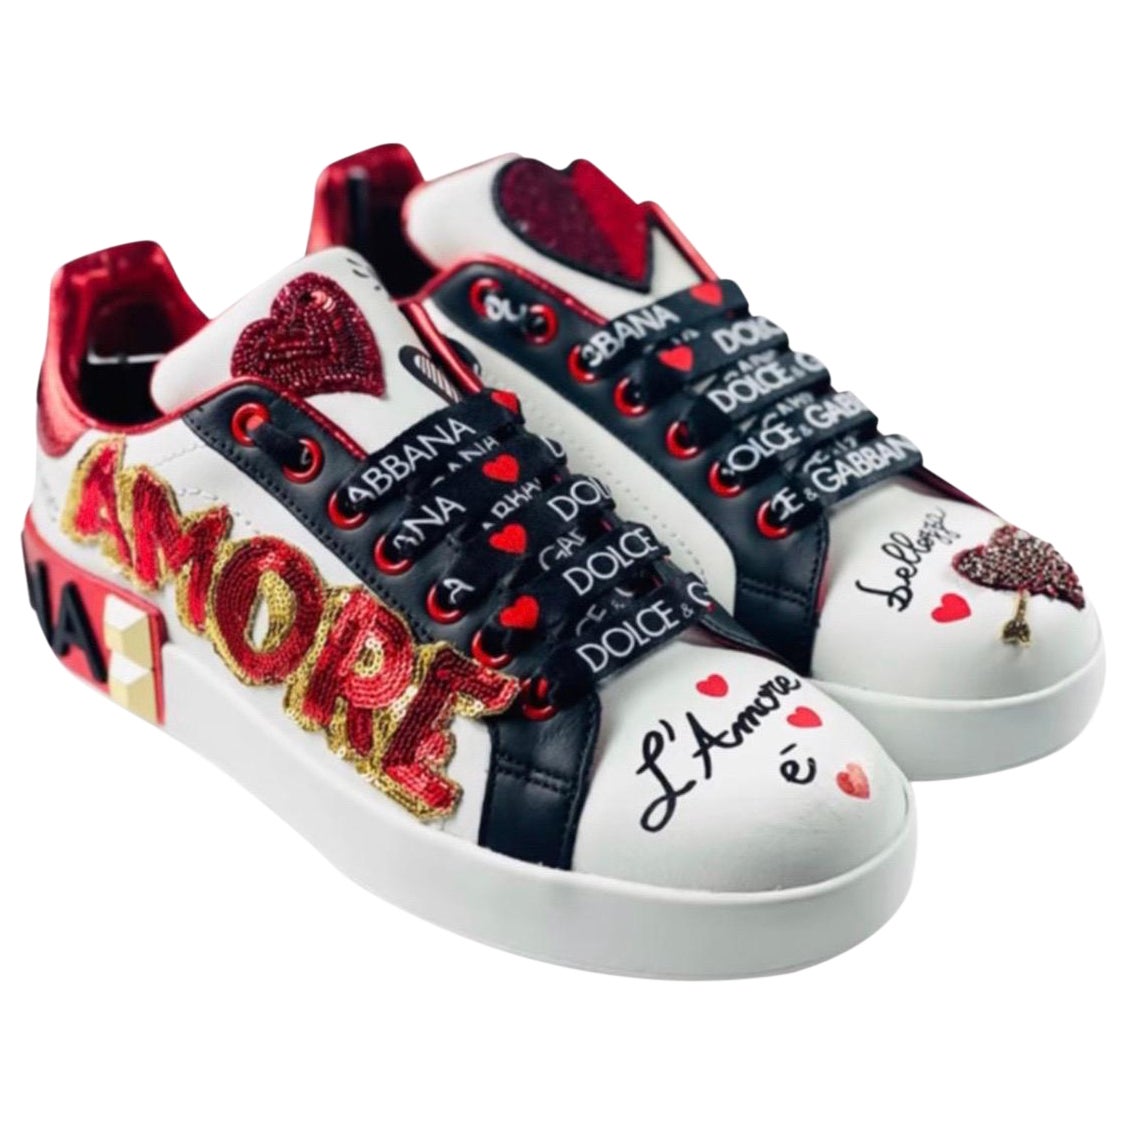 Dolce & Gabbana Portofino Amore e
Belezza embellished trainers sneakers shoes 